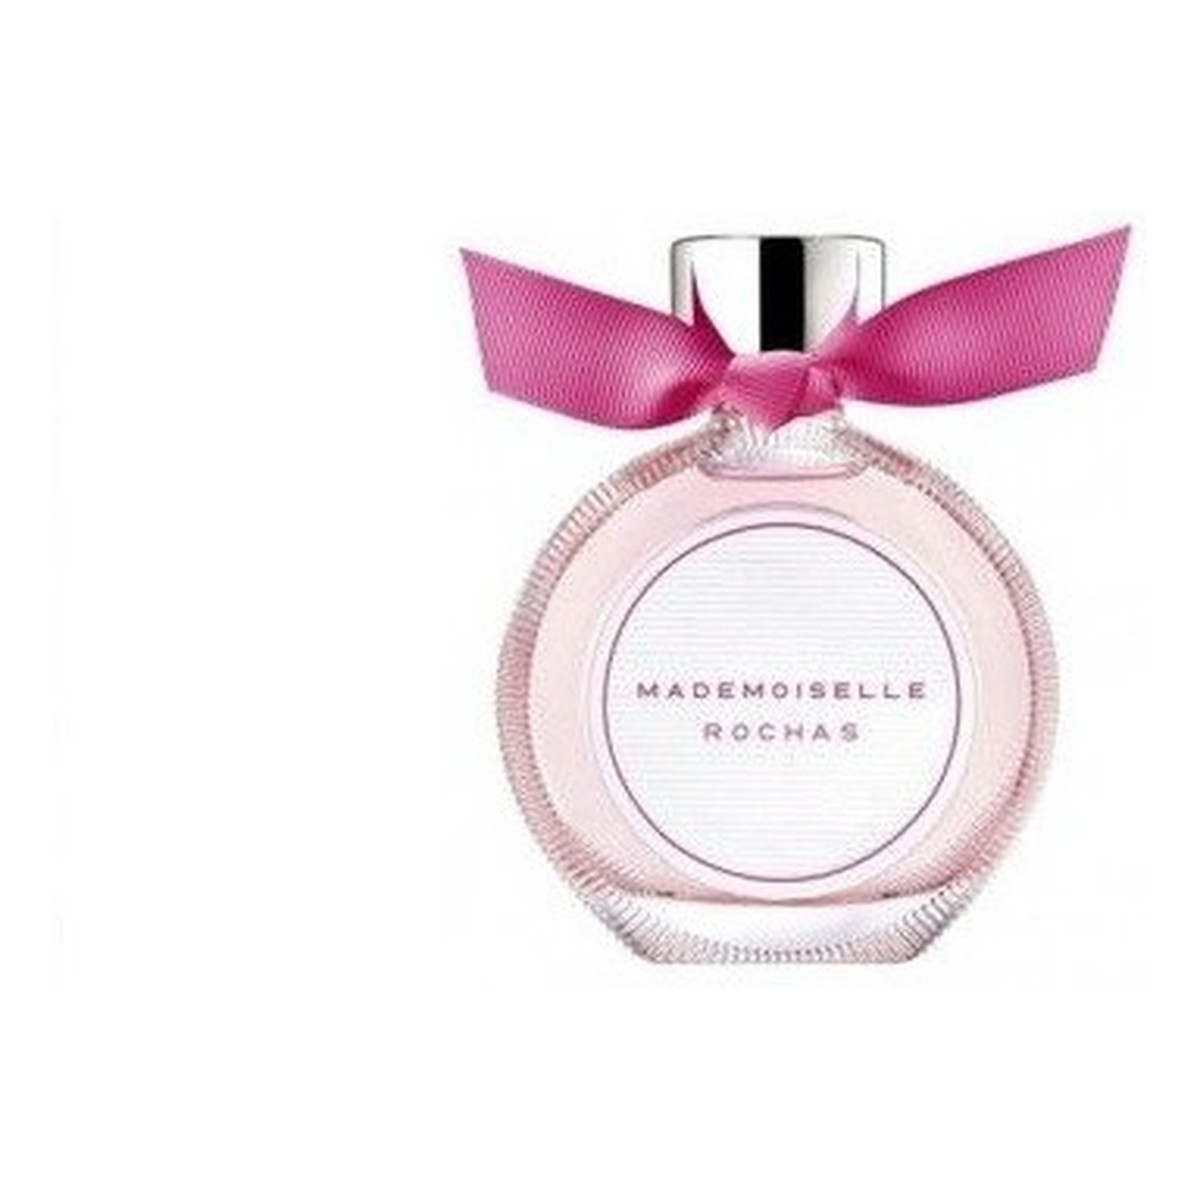 Rochas Mademoiselle Rochas Fun In Pink woda perfumowana 50ml